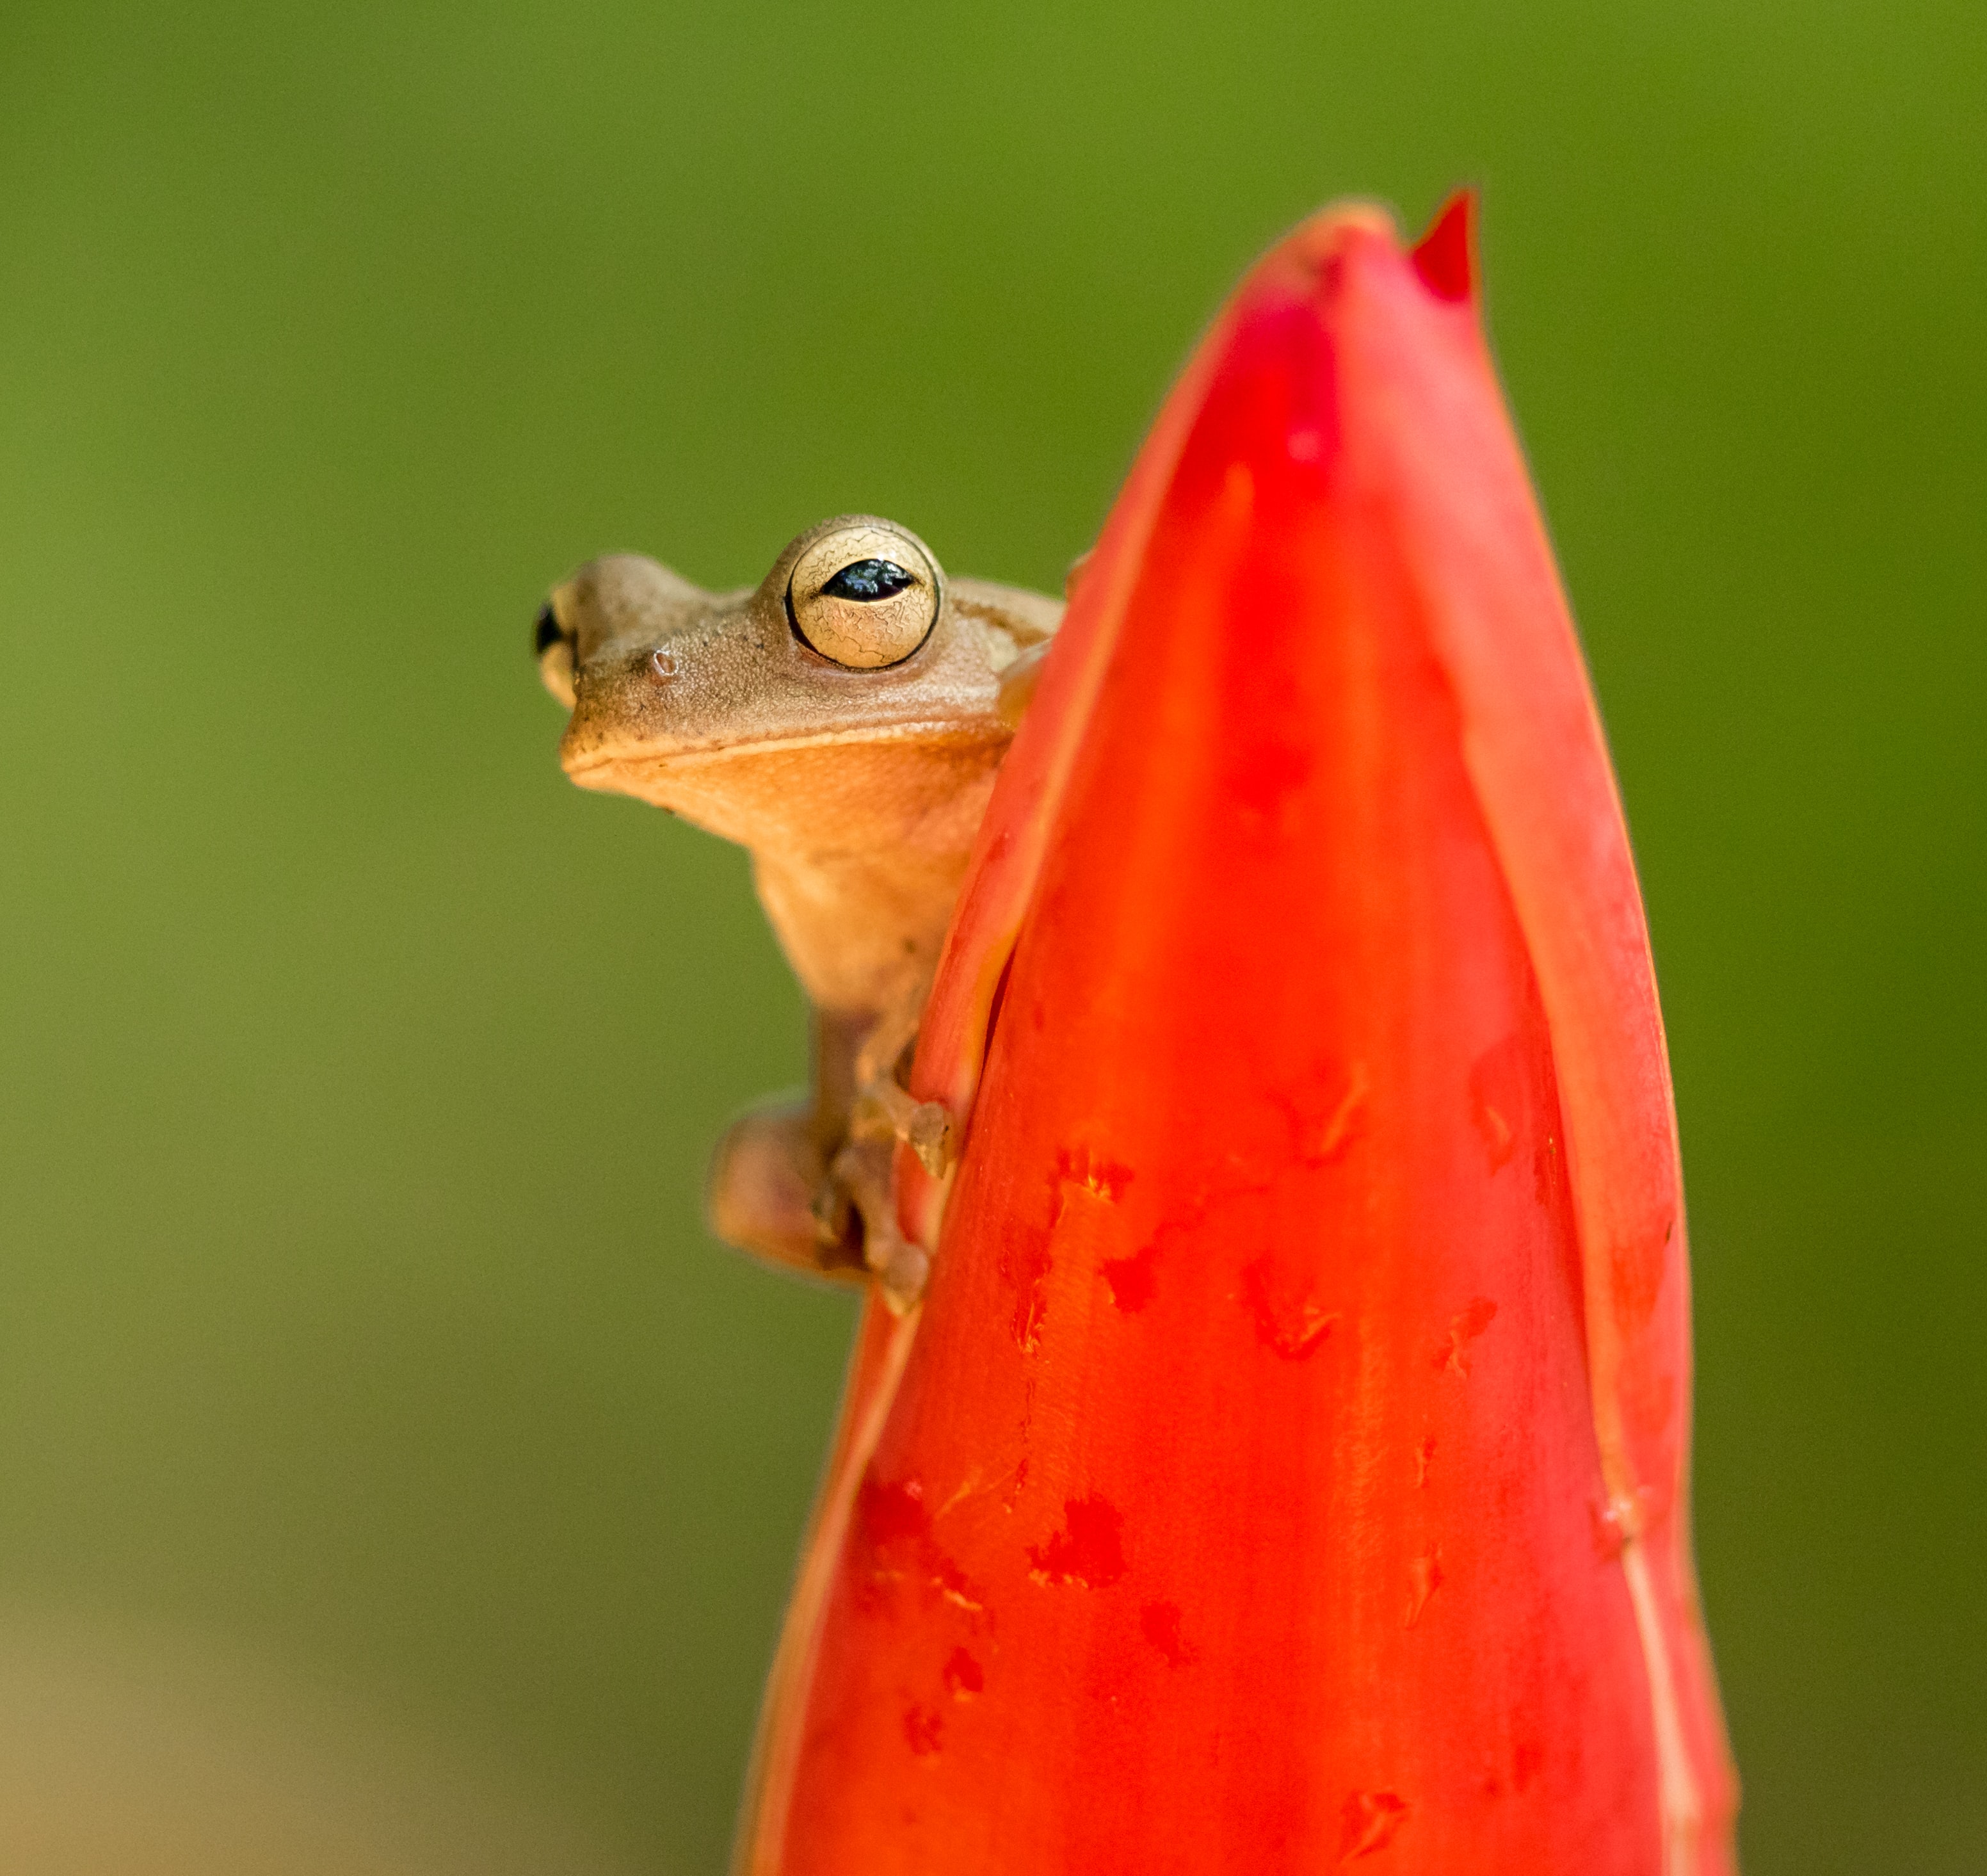 Frog on a Petal